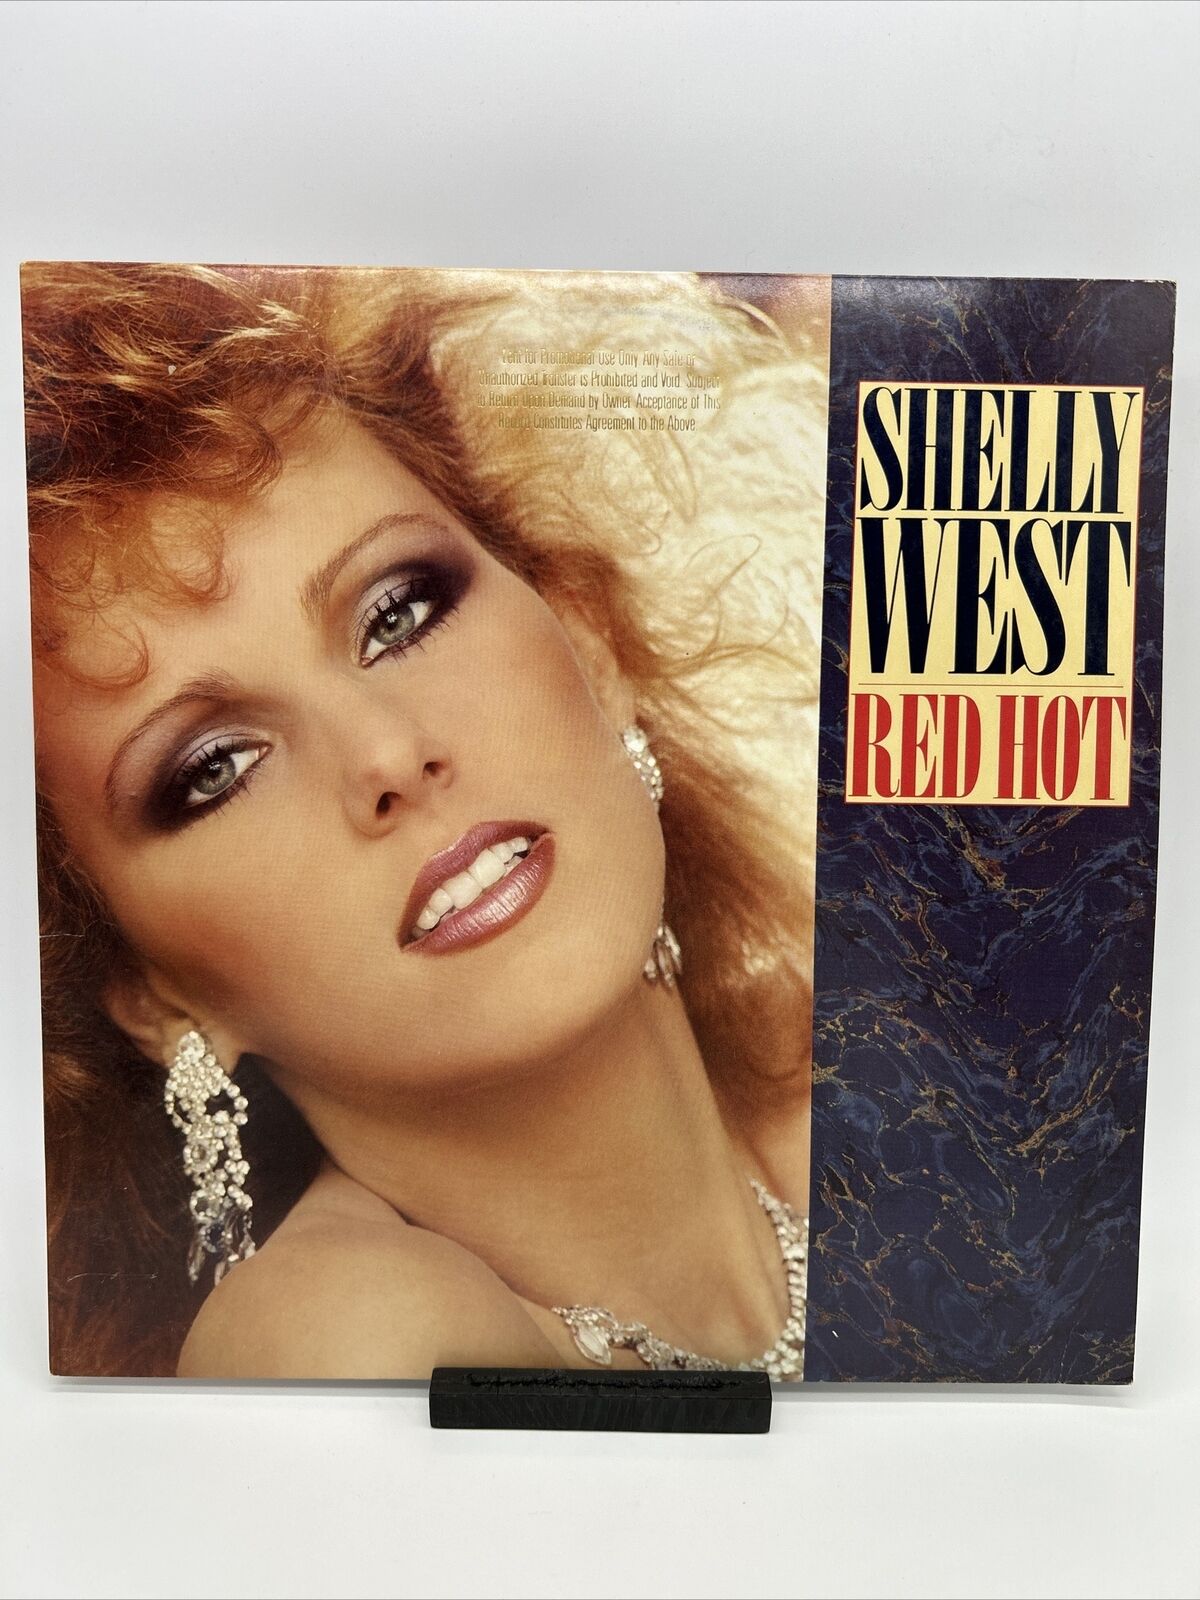 Shelly West Red Hot 1983 Vinyl LP Viva Records 1-23983 Promo